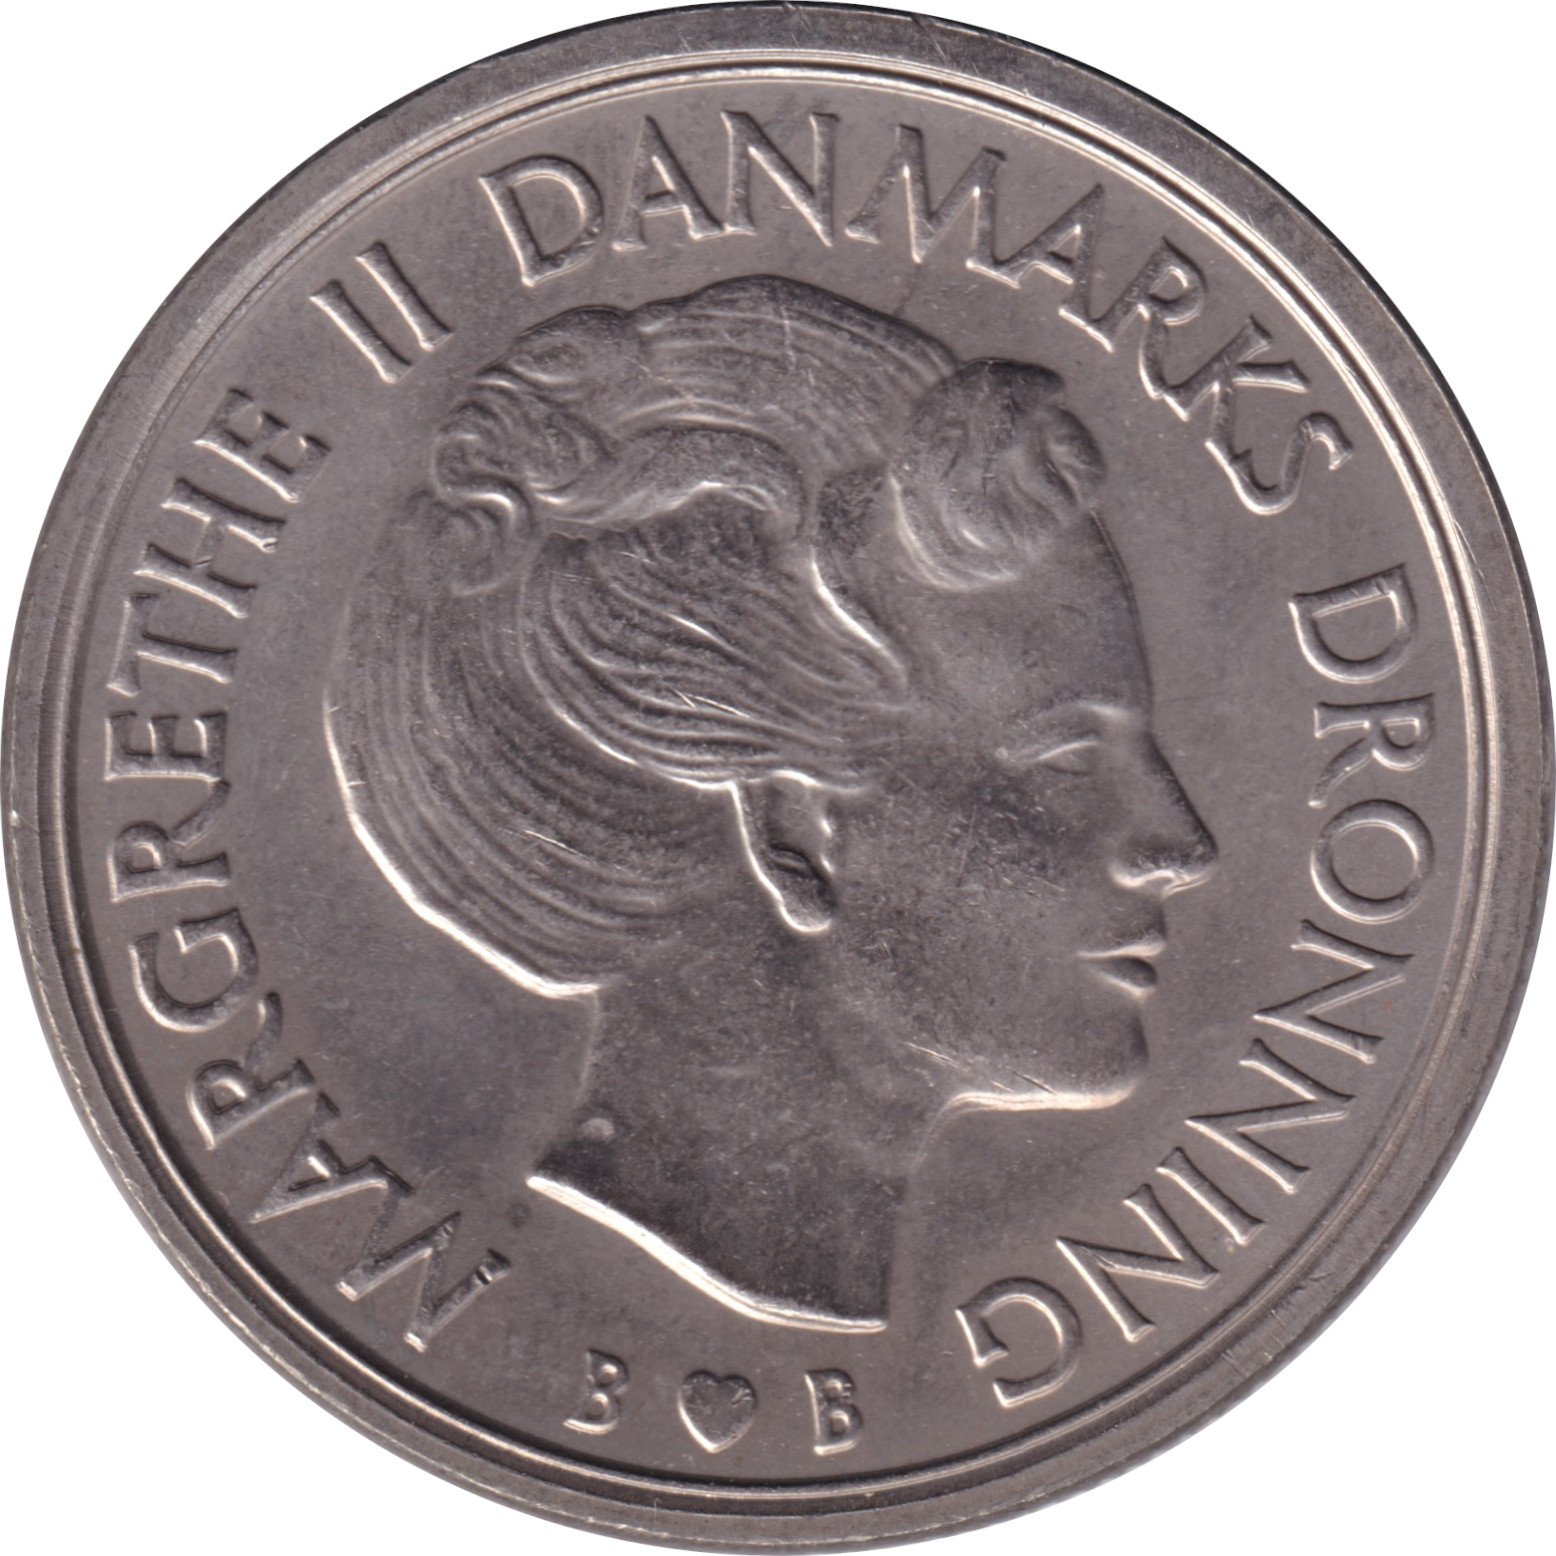 5 kroner - Margrethe II - Shield